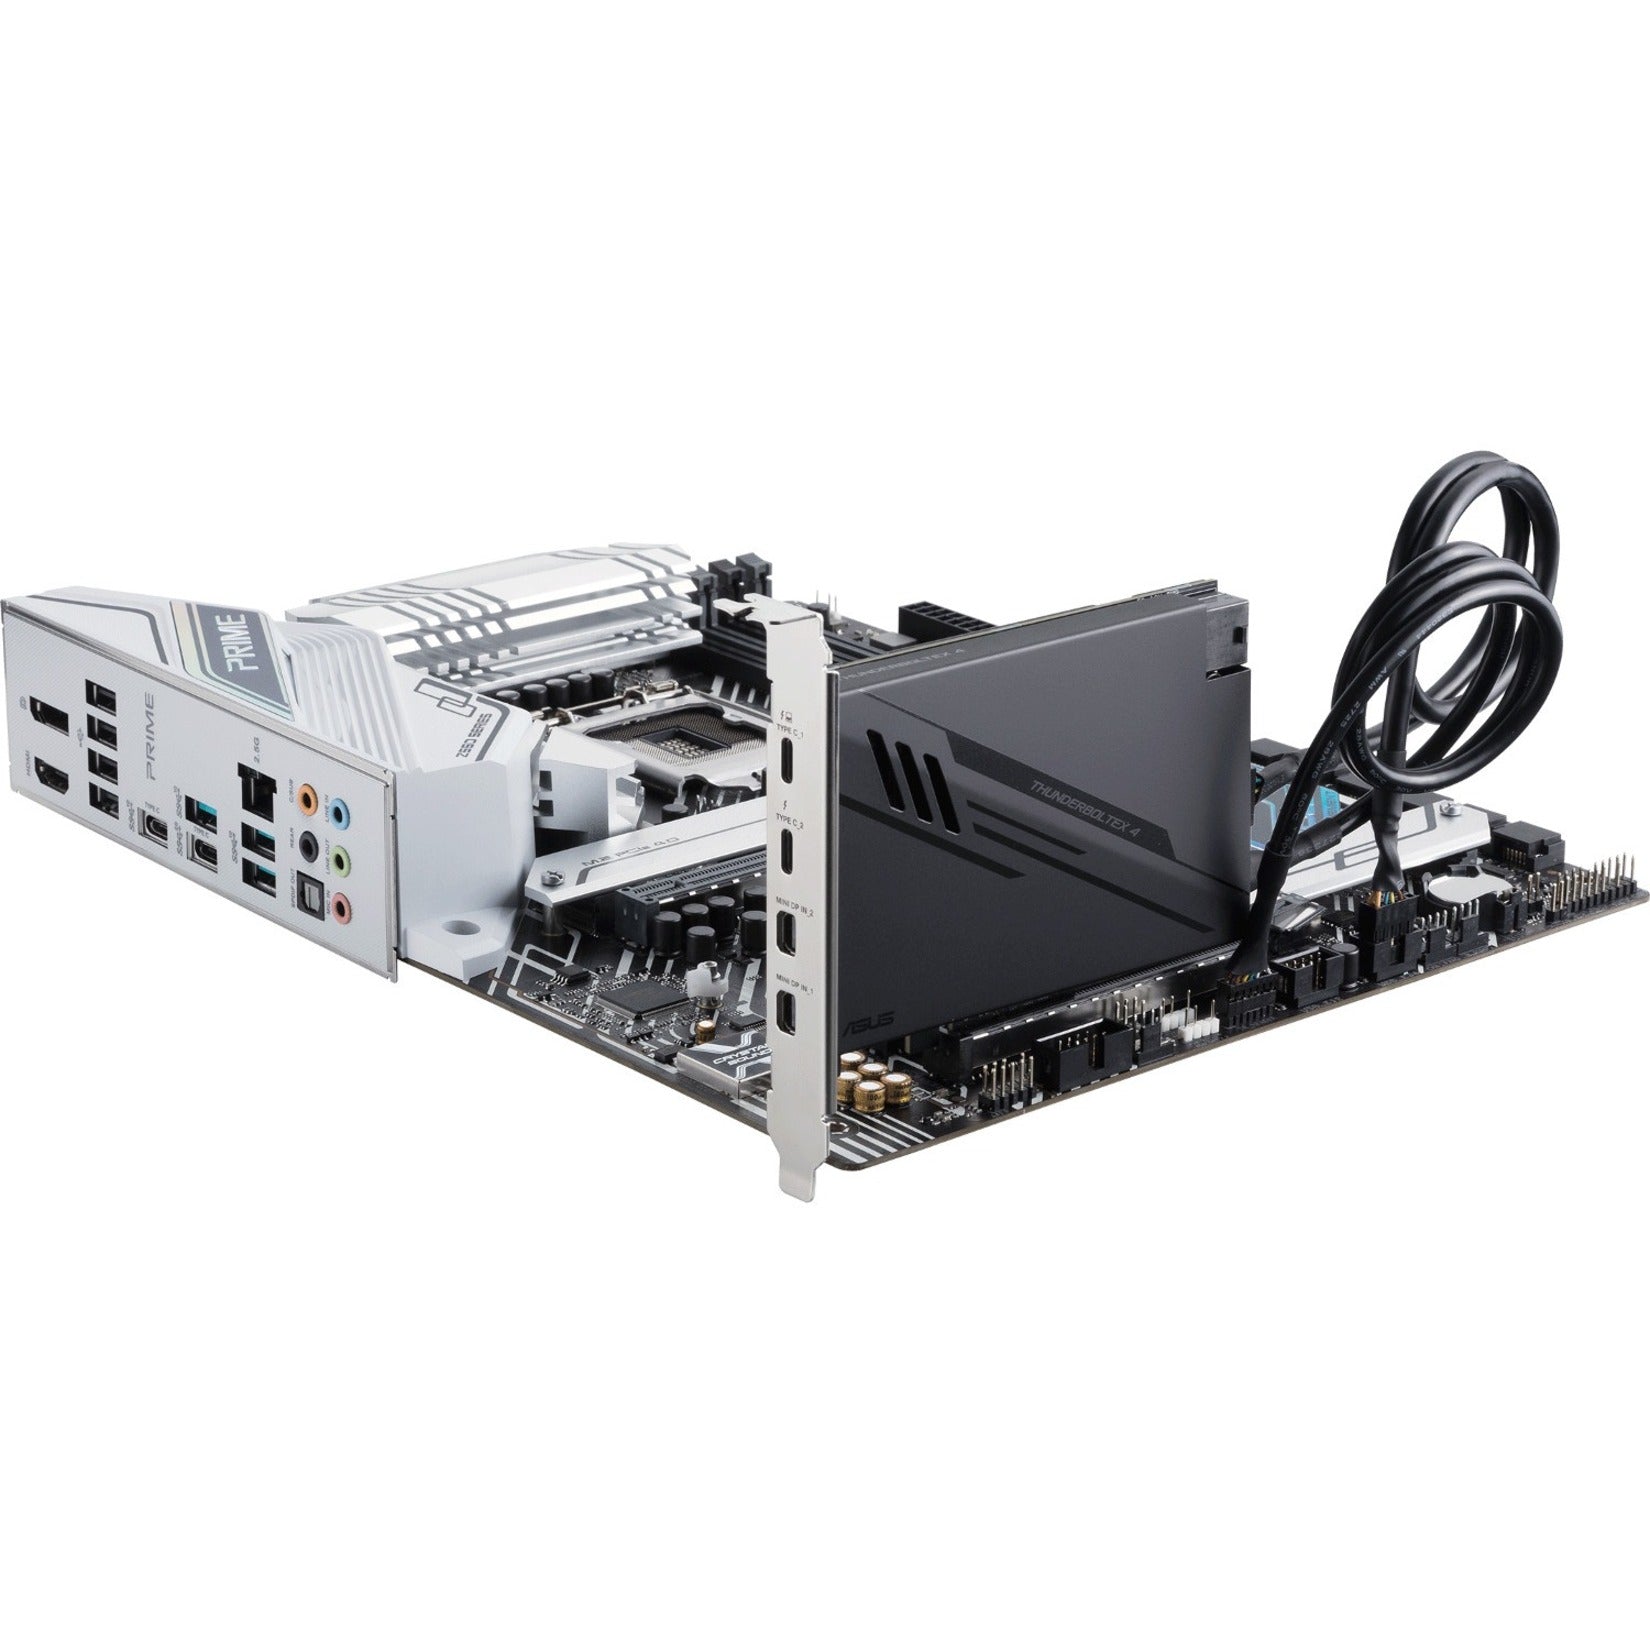 ASUS PRIME Z590-A LGA 1200 Motherboard, 14+2 DrMOS Power Stages, 3x M.2, Intel 2.5 Gb LAN, USB 3.2 Type-C, Thunderbolt 4, Aura Sync RGB Lighting